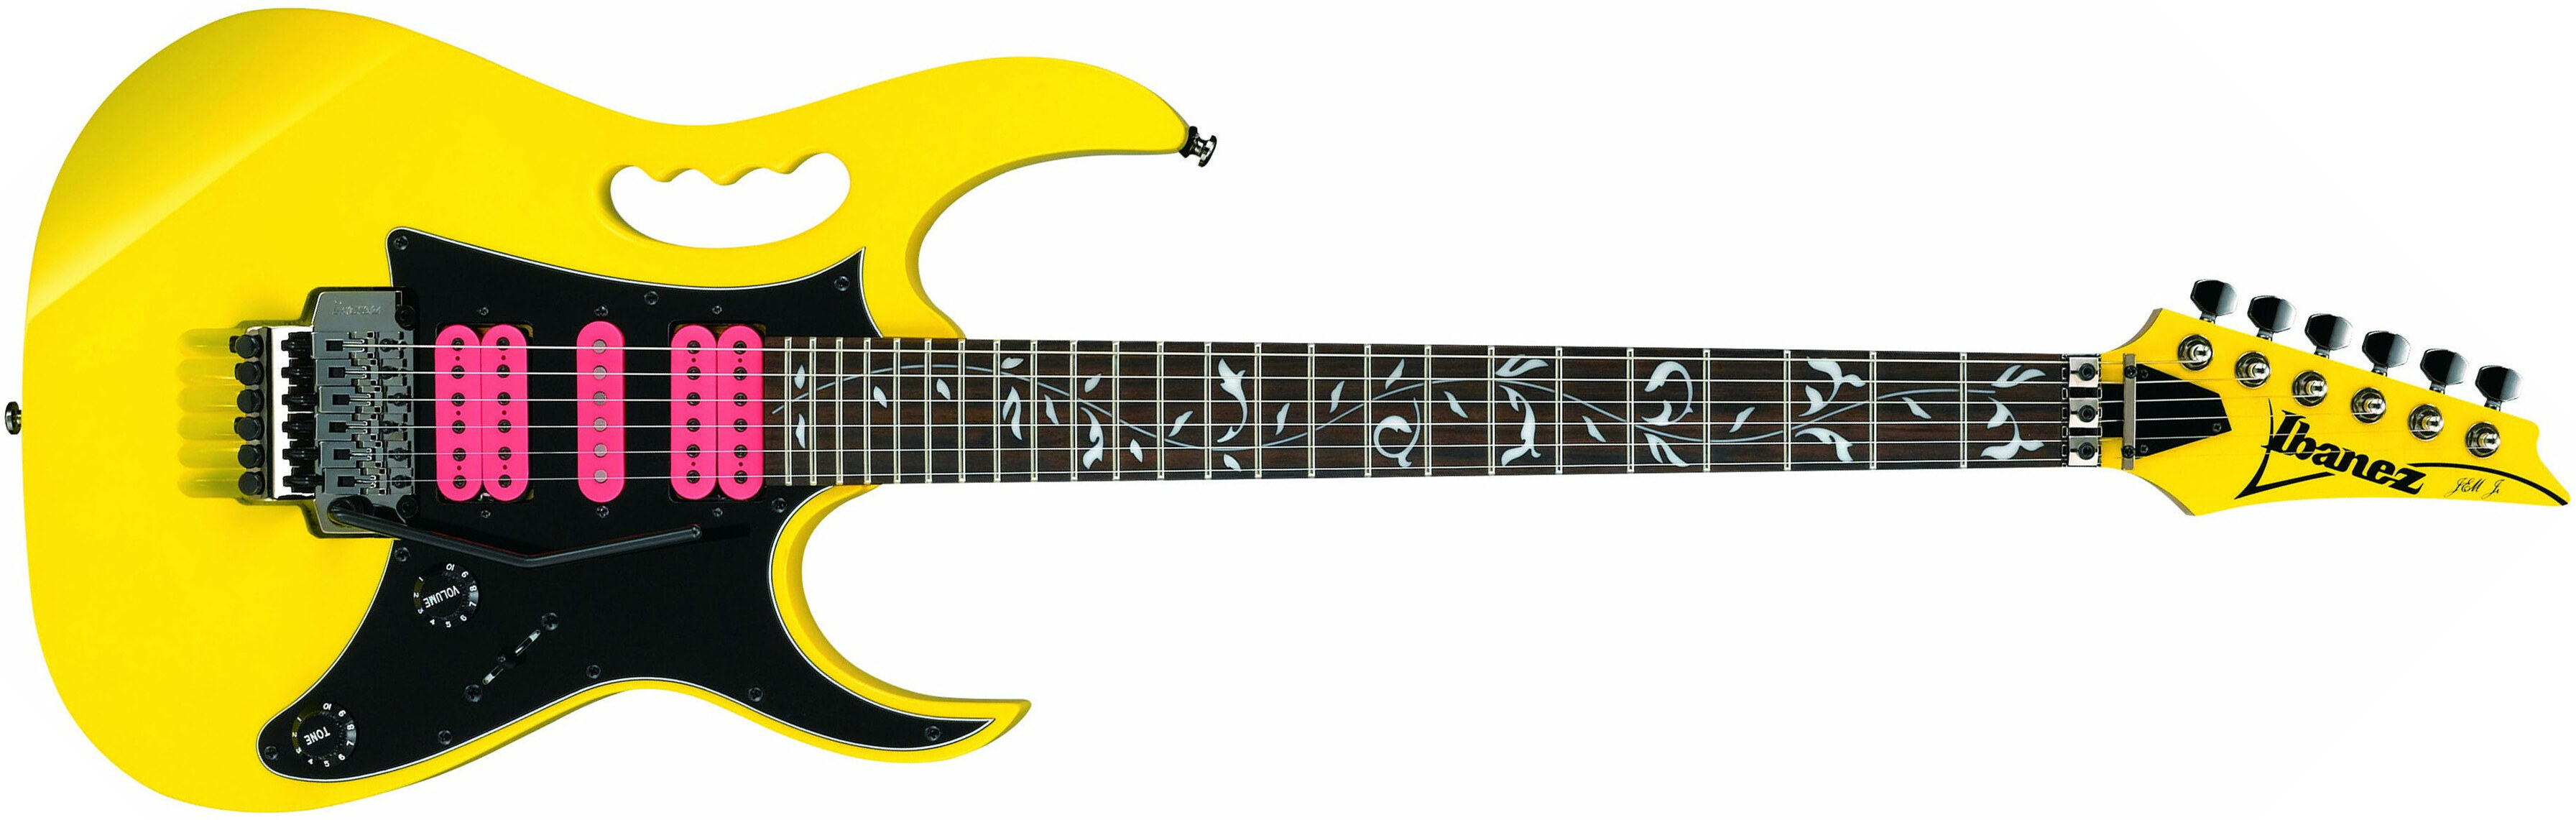 Ibanez Steve Vai Jemjr Ye Signature Hsh Fr Rw - Yellow - E-Gitarre in Str-Form - Main picture